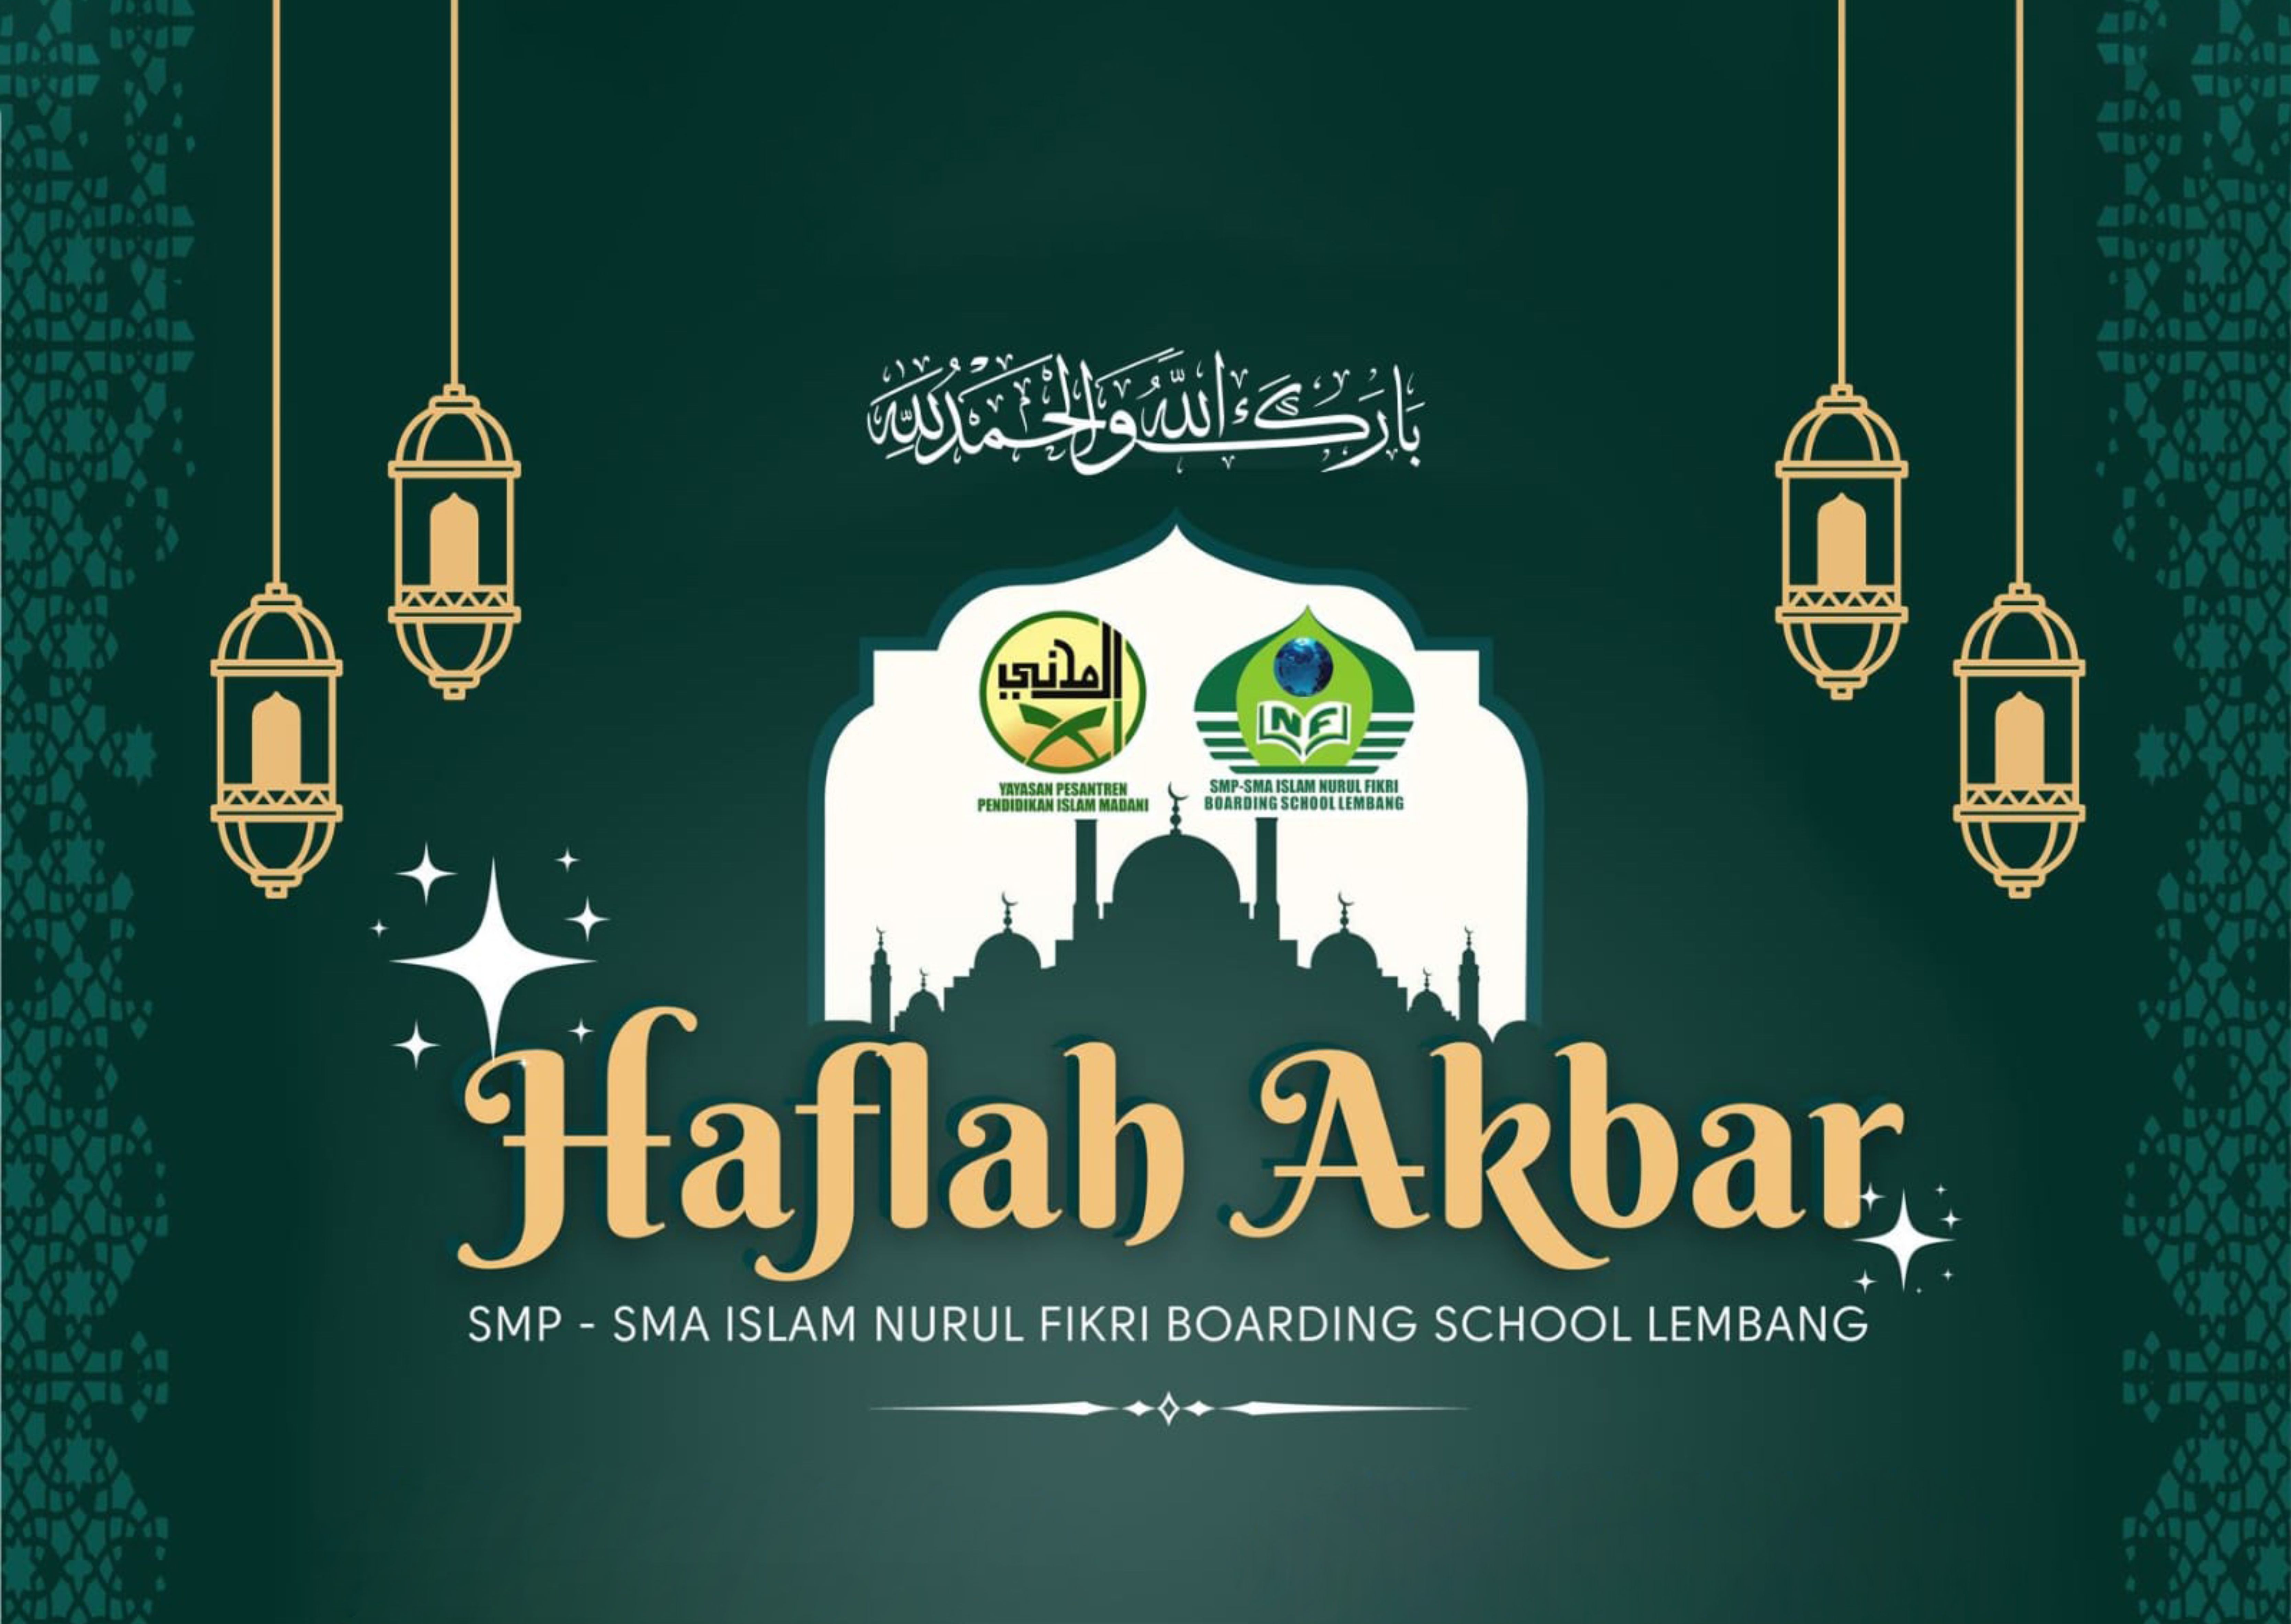 Haflah Akbar SMP-SMA Nurul Fikri Boarding School Lembang